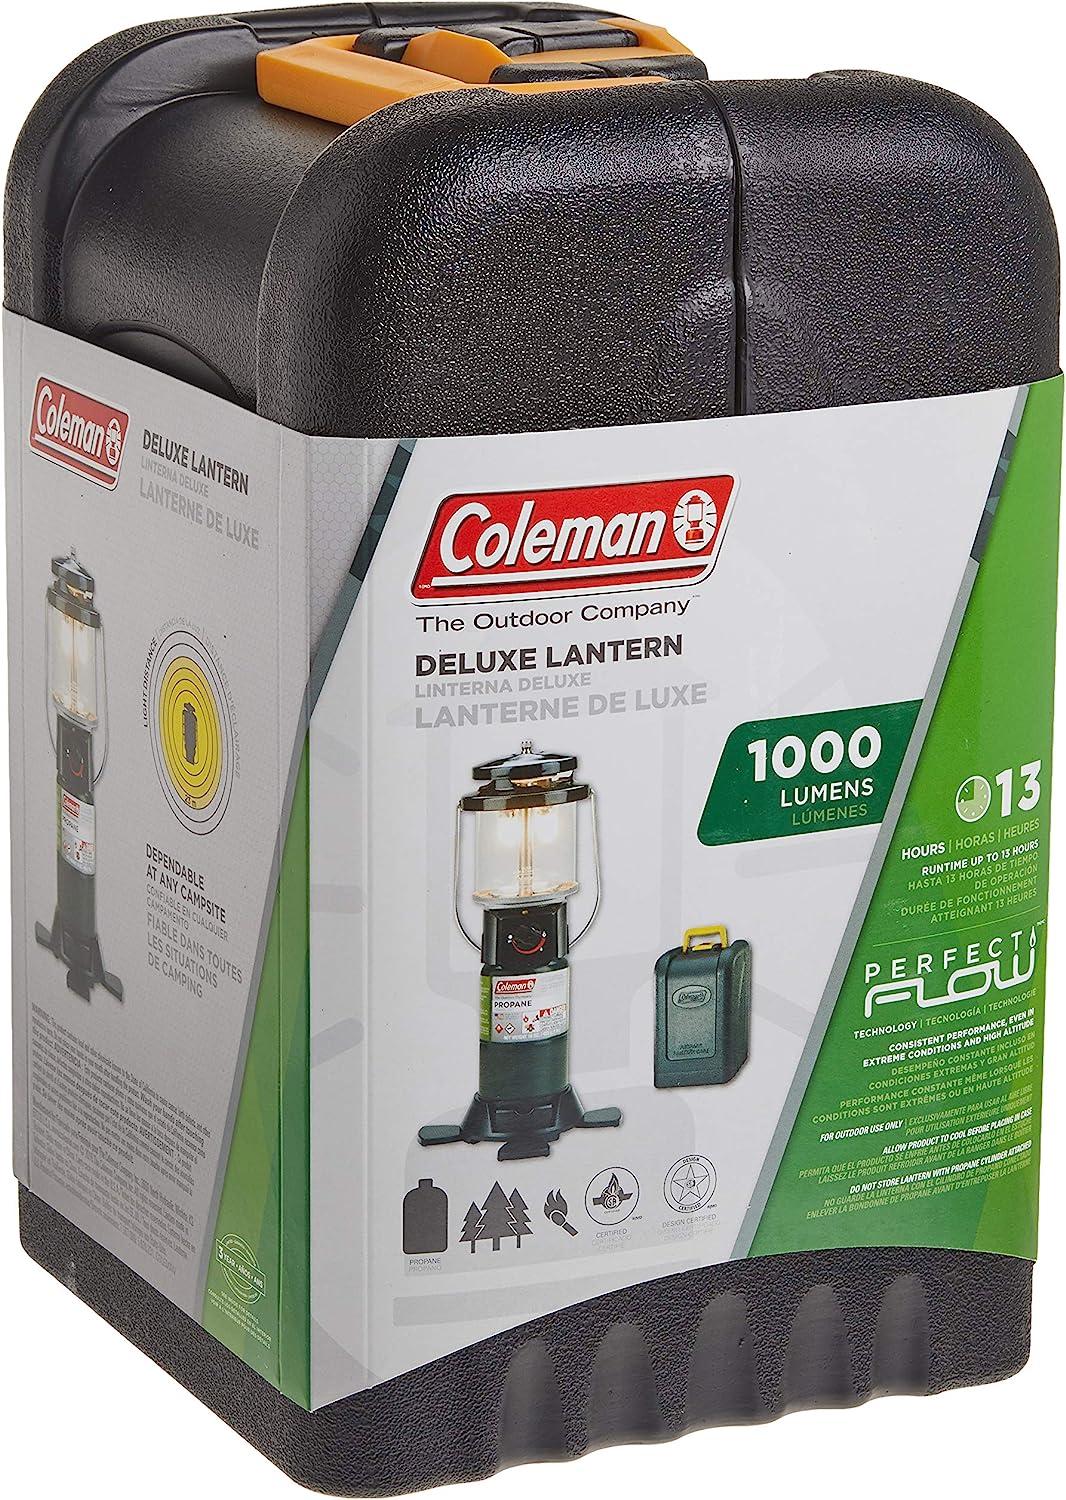 Coleman Company Camping Lantern - 2000026520